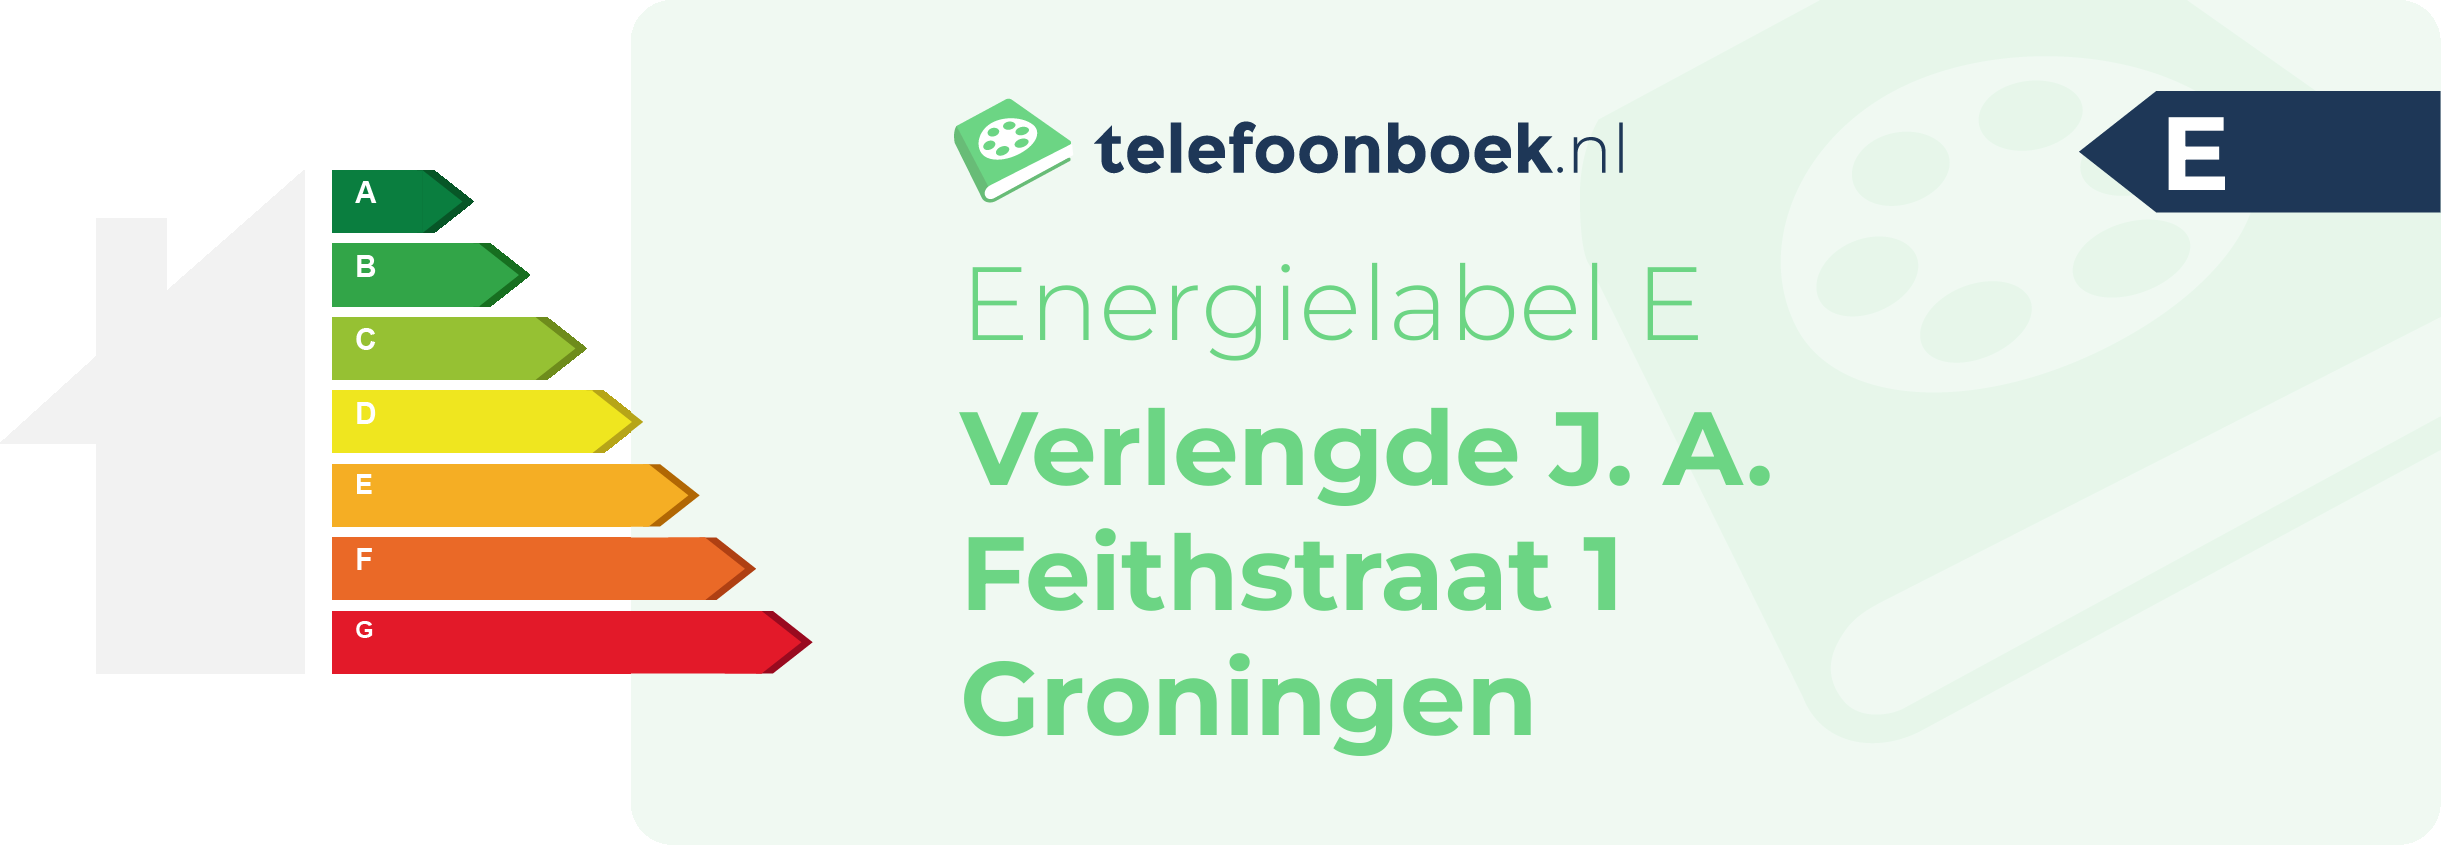 Energielabel Verlengde J. A. Feithstraat 1 Groningen